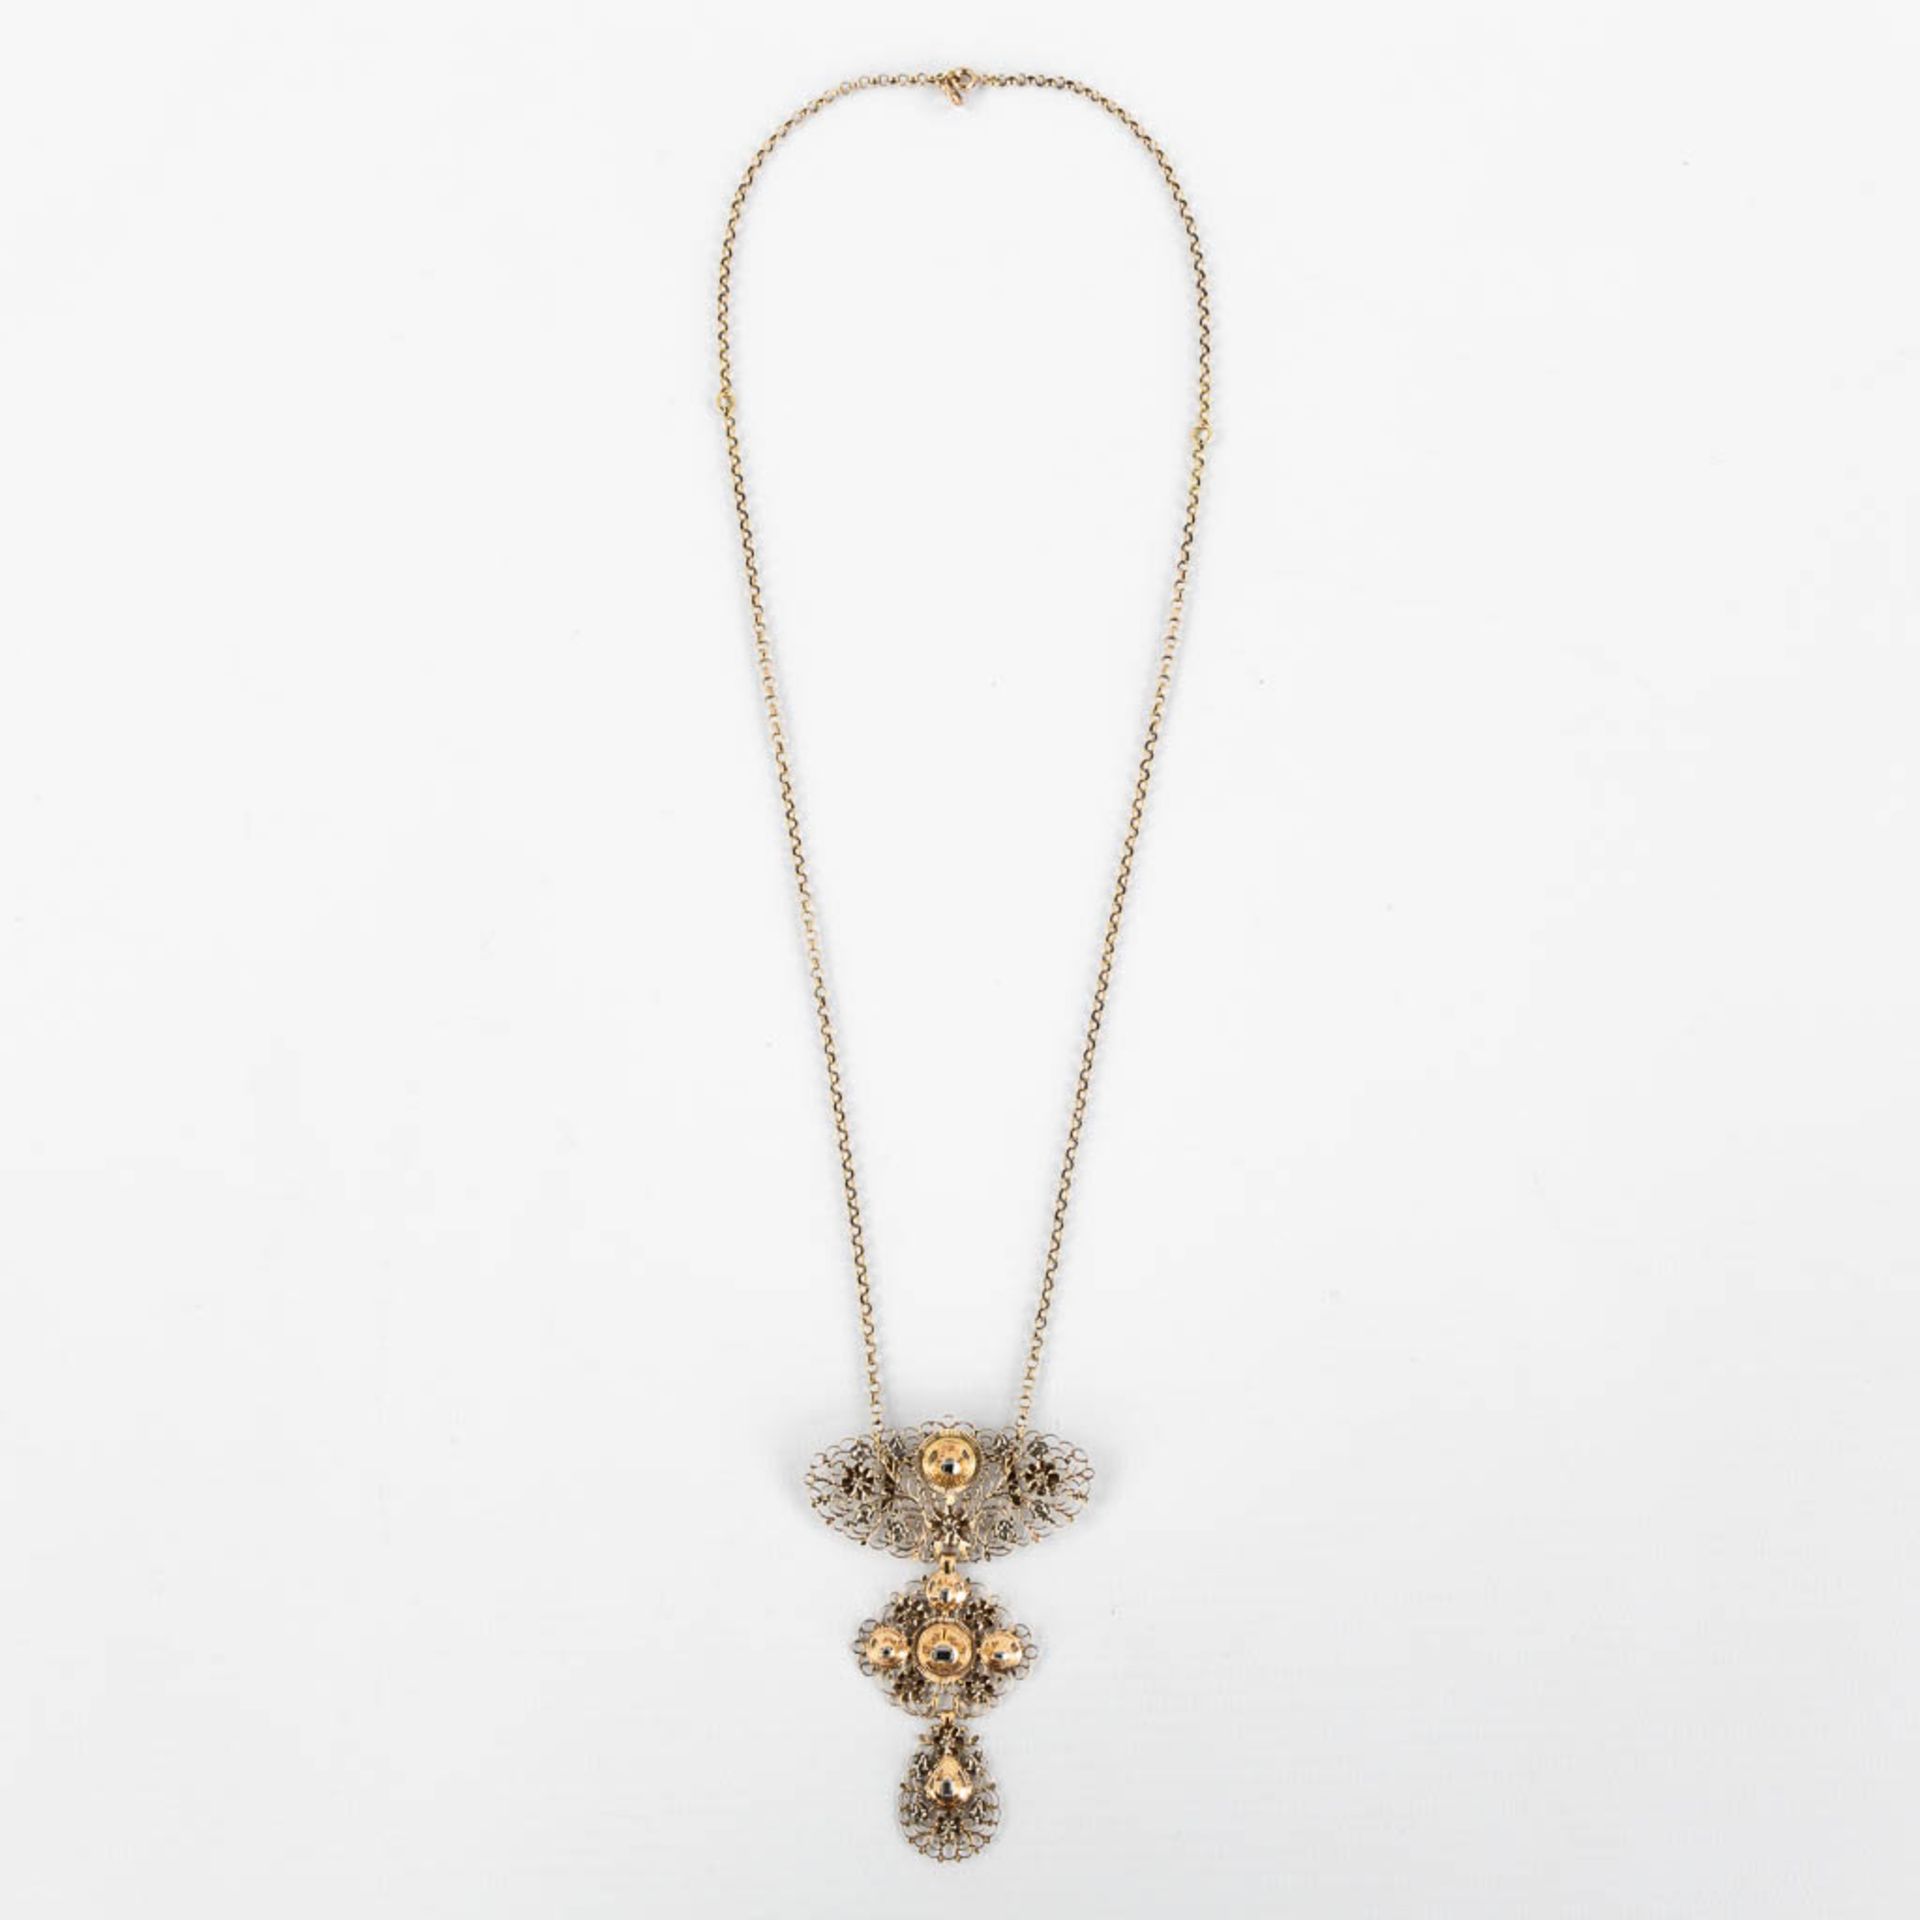 An antique pendant, 18kt yellow gold with old-cut diamonds. 19th C. (H:7,8 cm) - Bild 3 aus 6